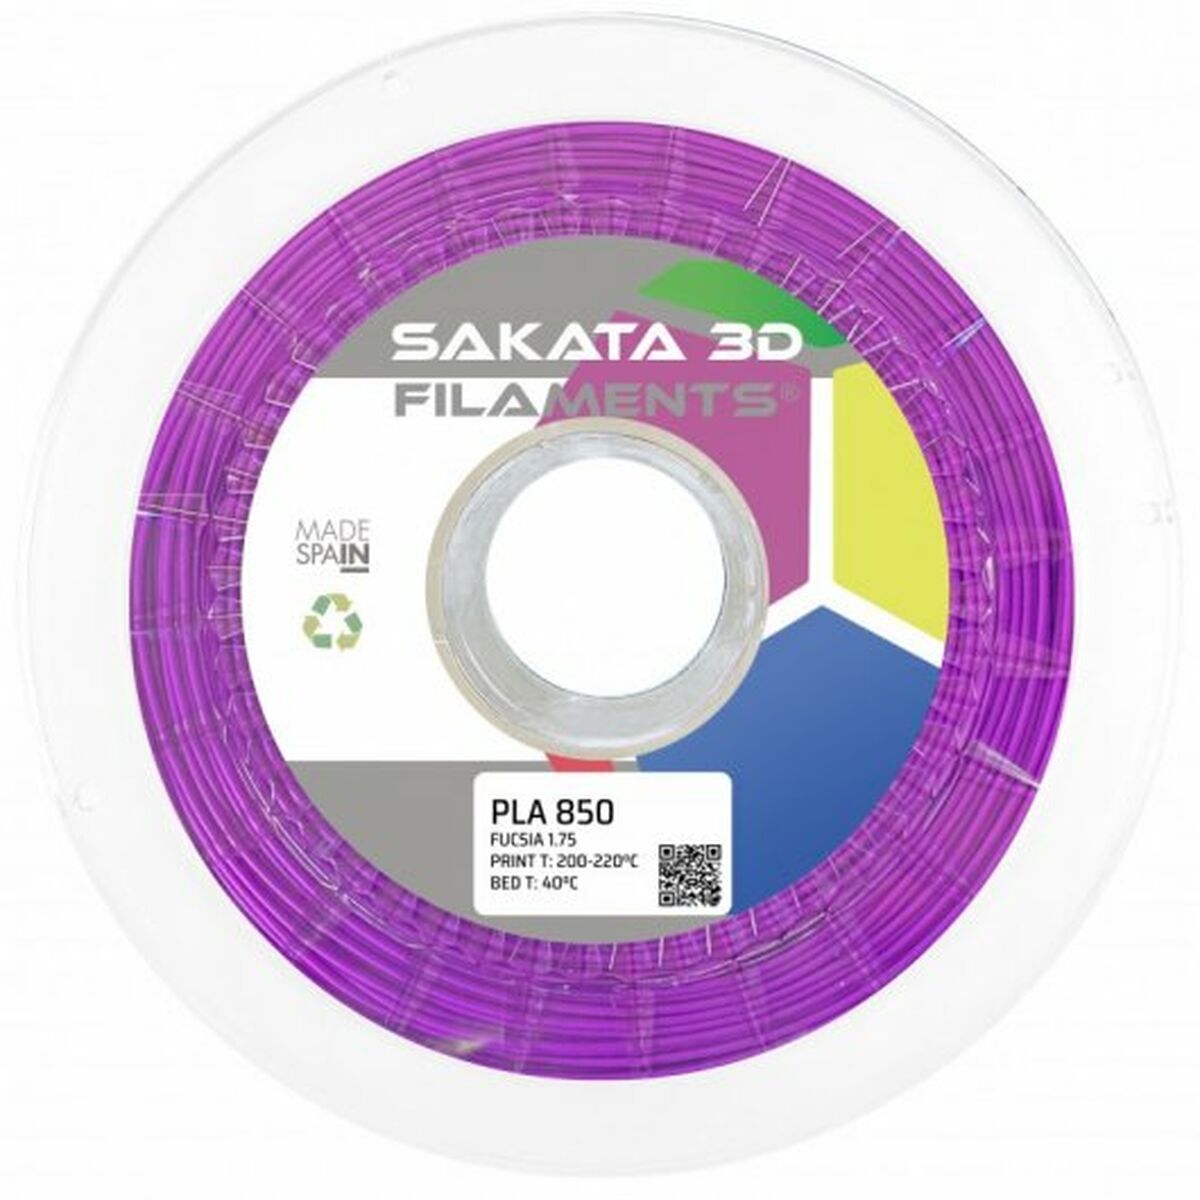 Bobina di Filamento Sakata 3D PLA 850